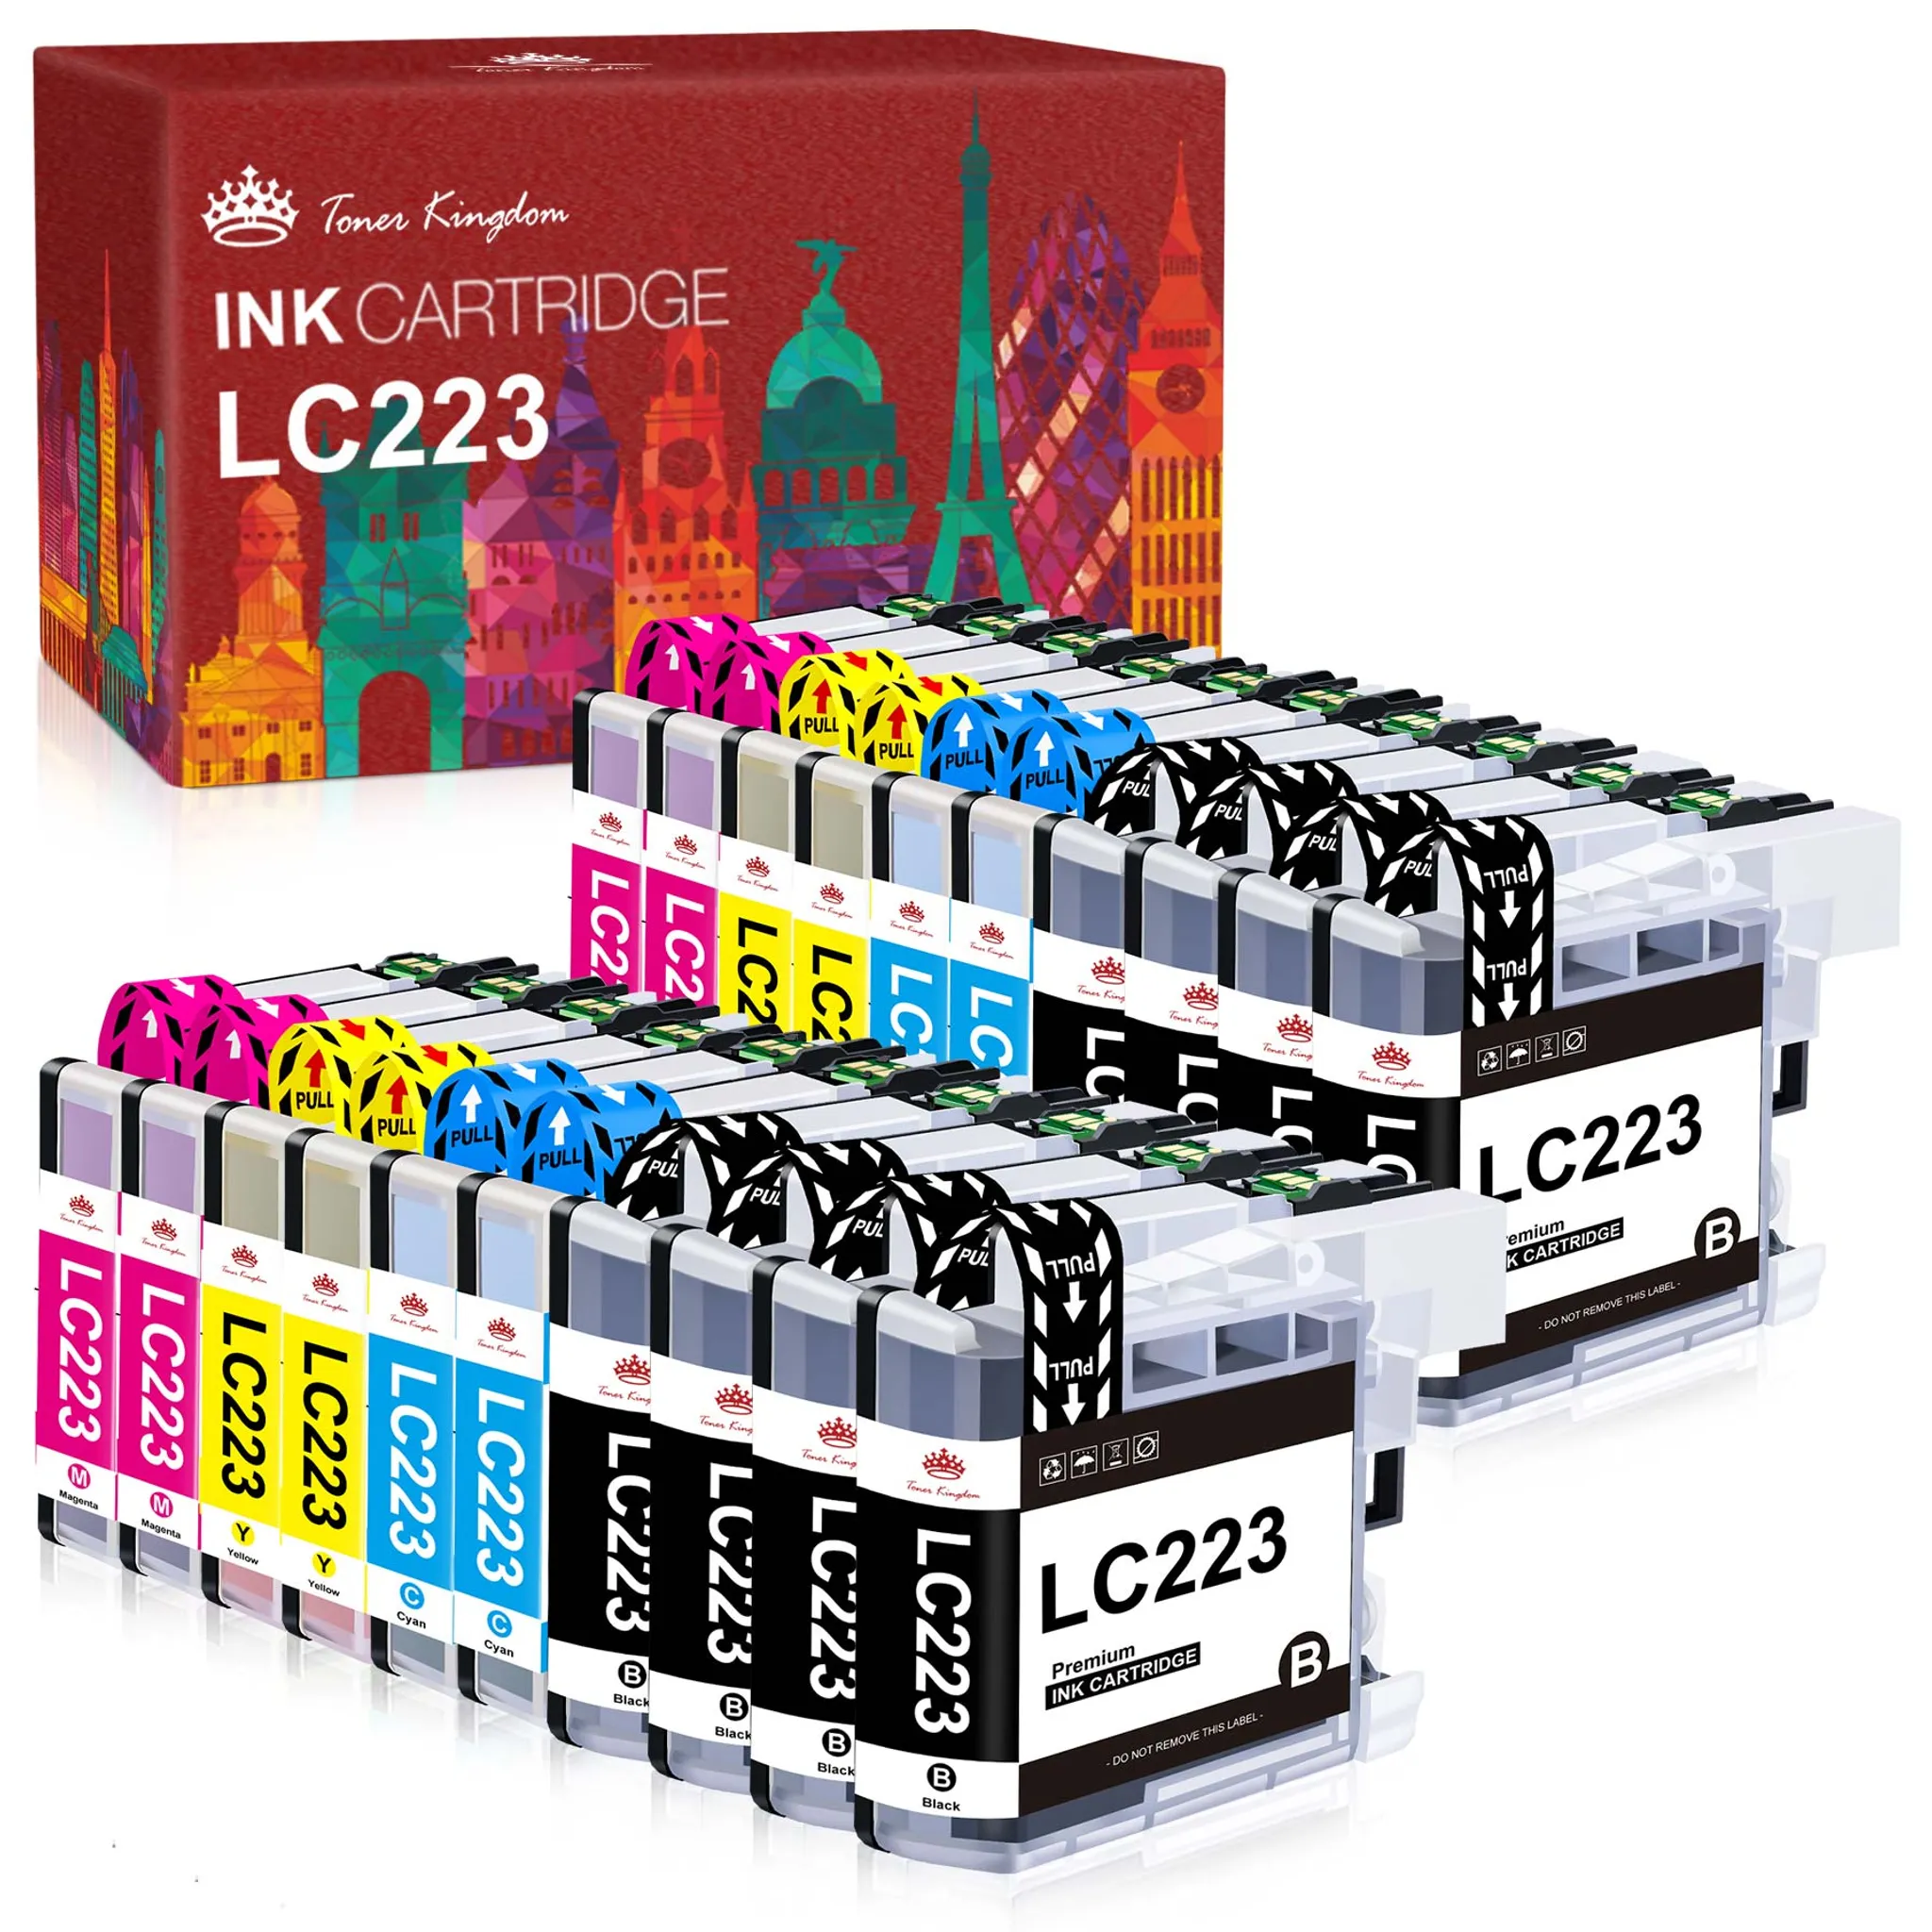 Nopan-ink - x1 cartouche brother lc223 xl lc223xl compatible - La